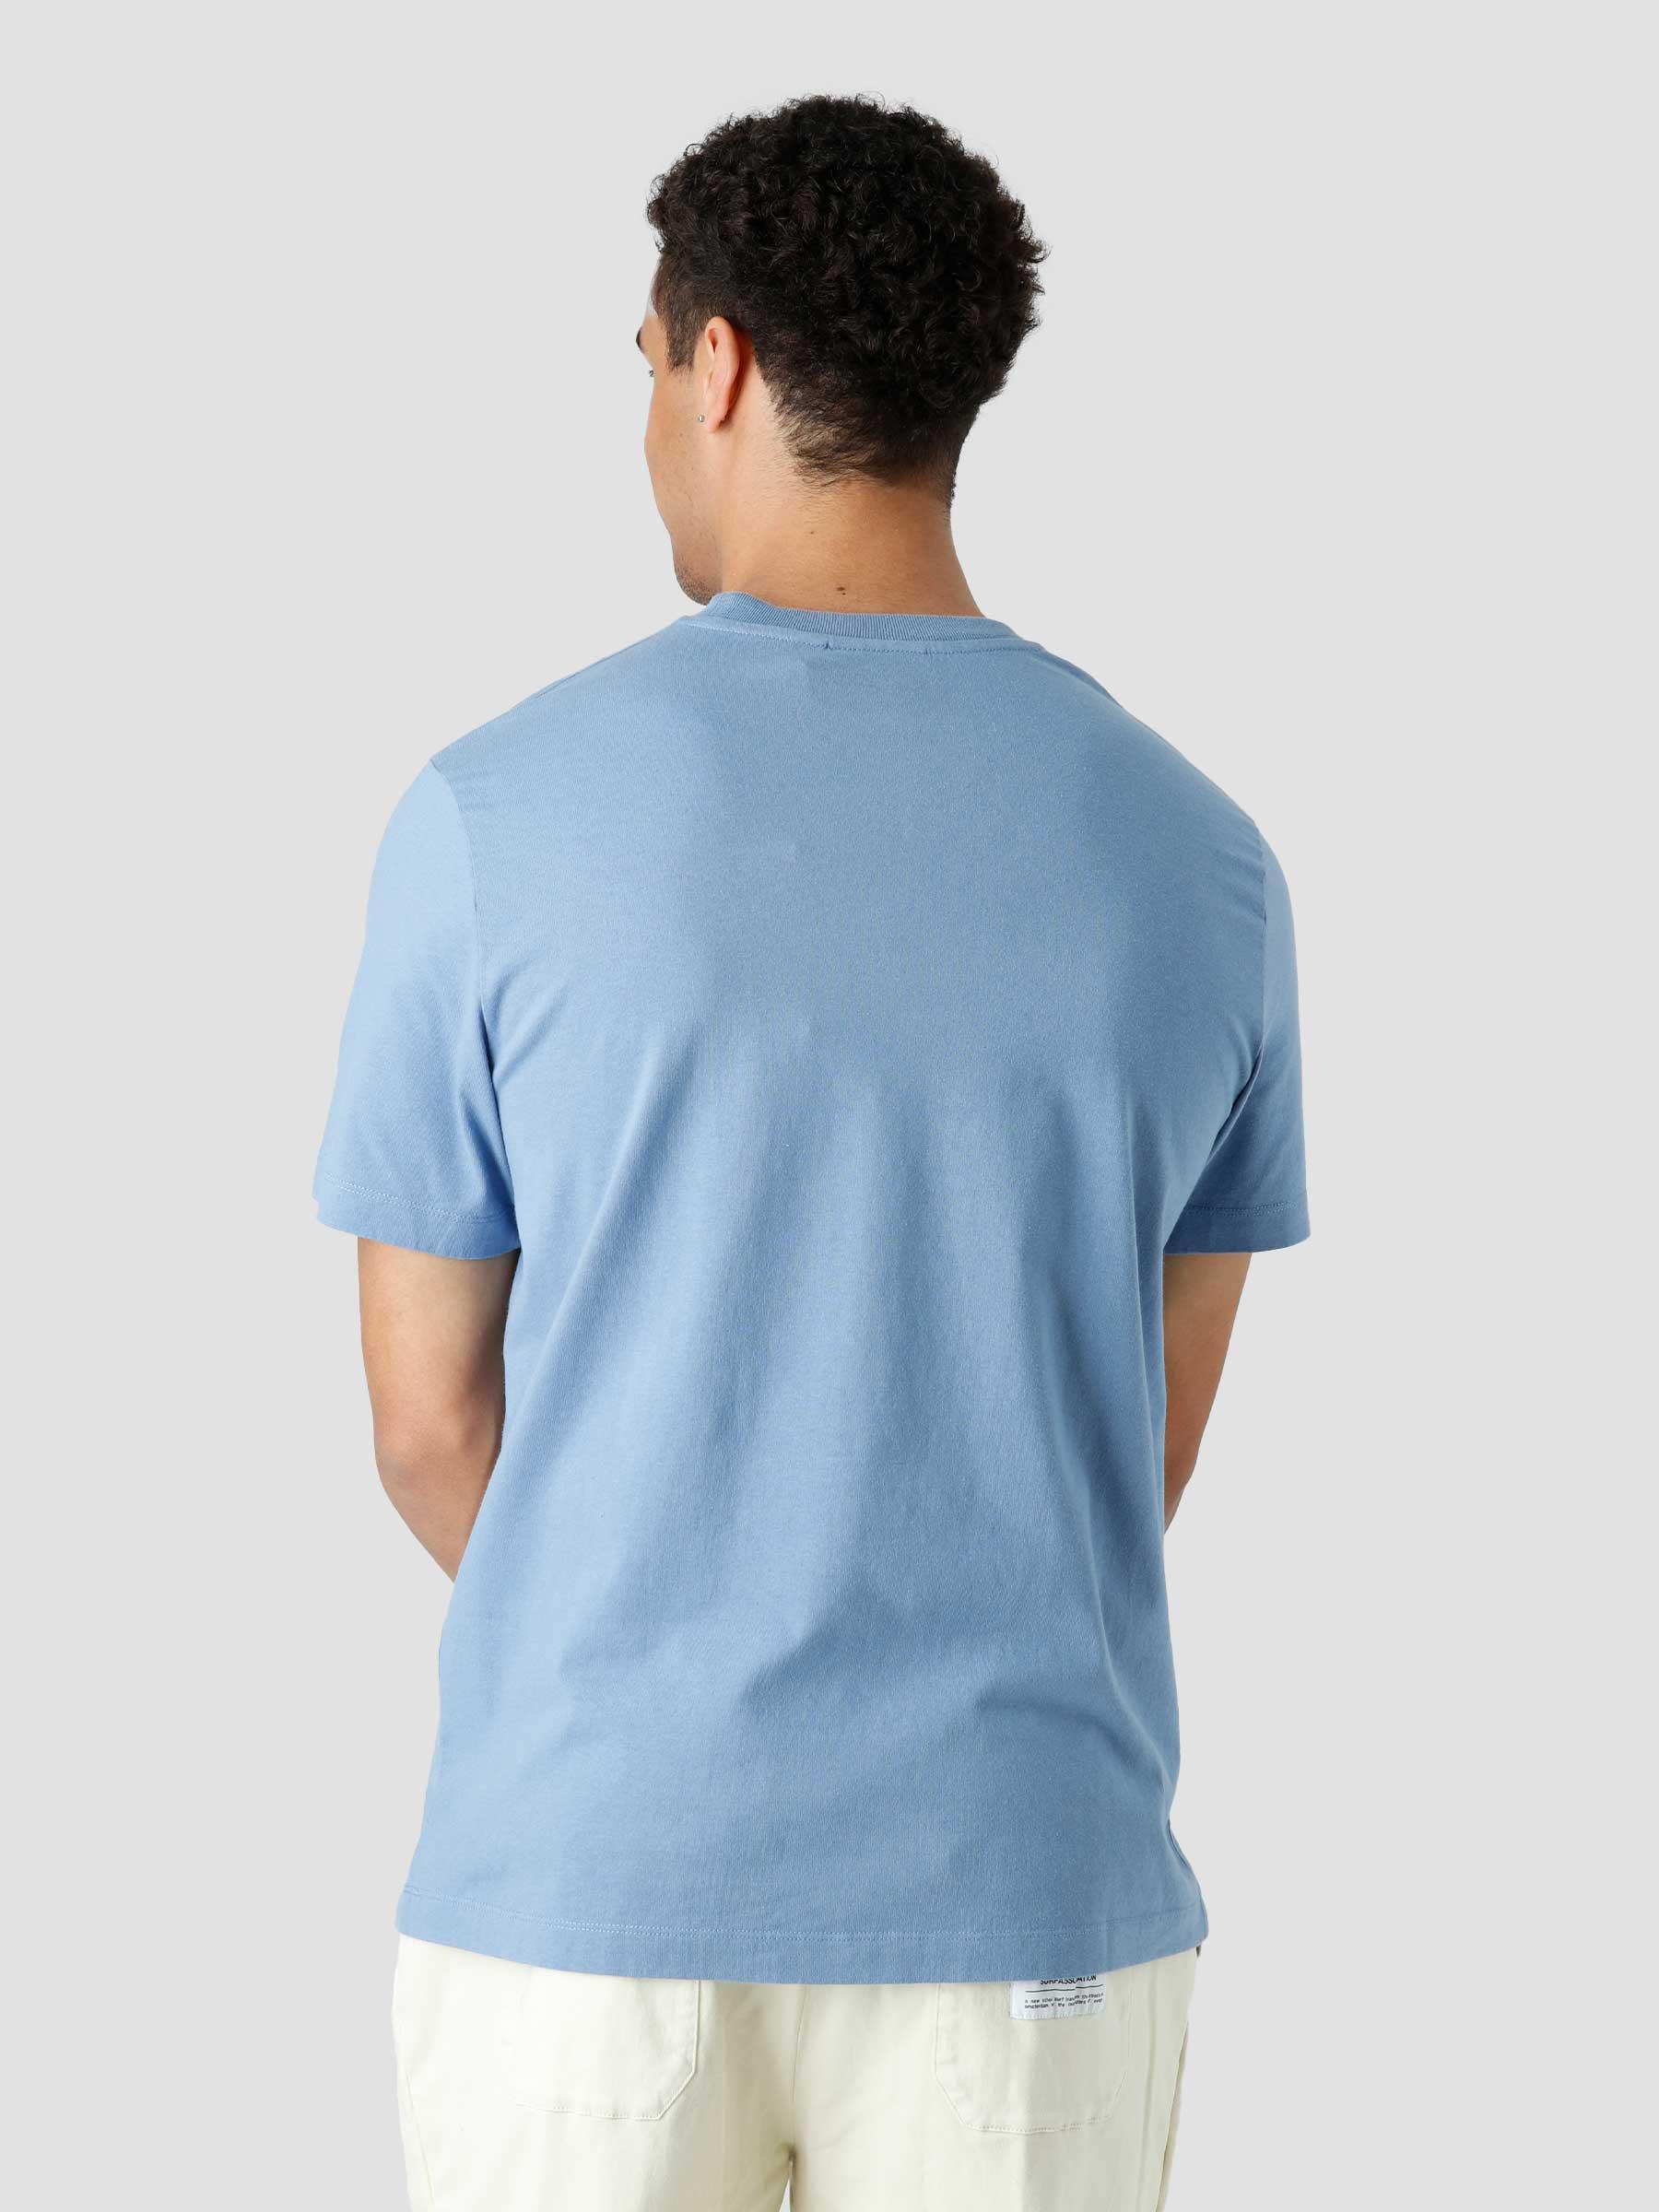 Duo Toned Adversaries T-Shirt Blue 47516